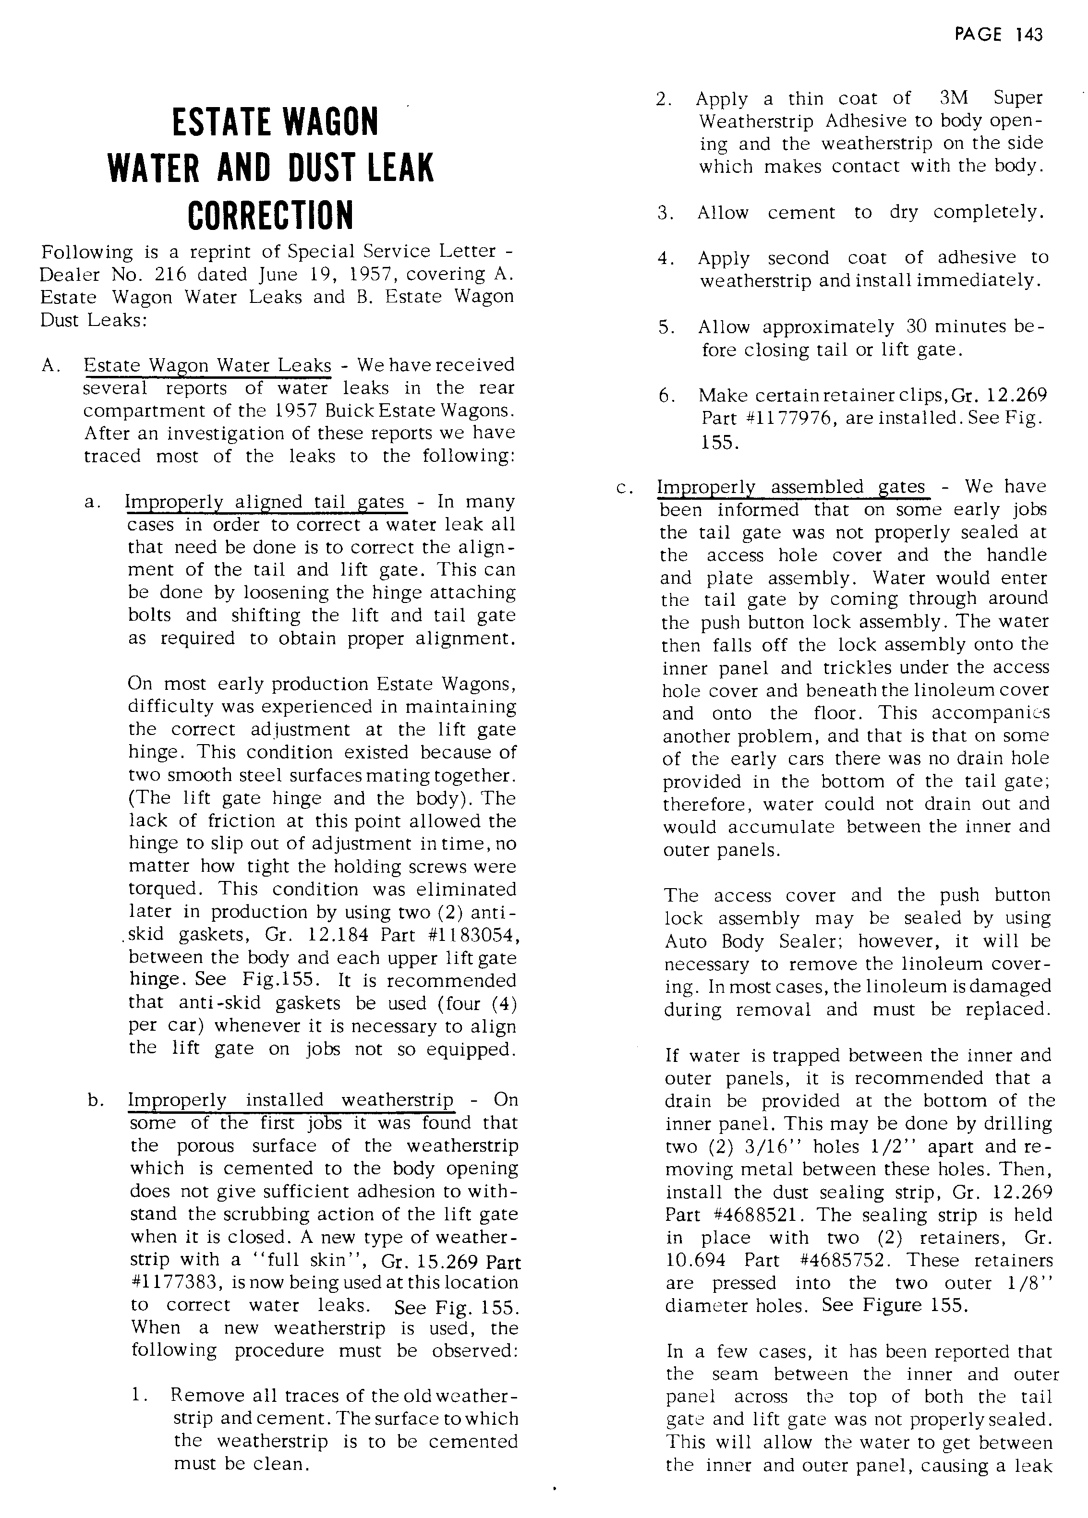 n_1957 Buick Product Service  Bulletins-144-144.jpg